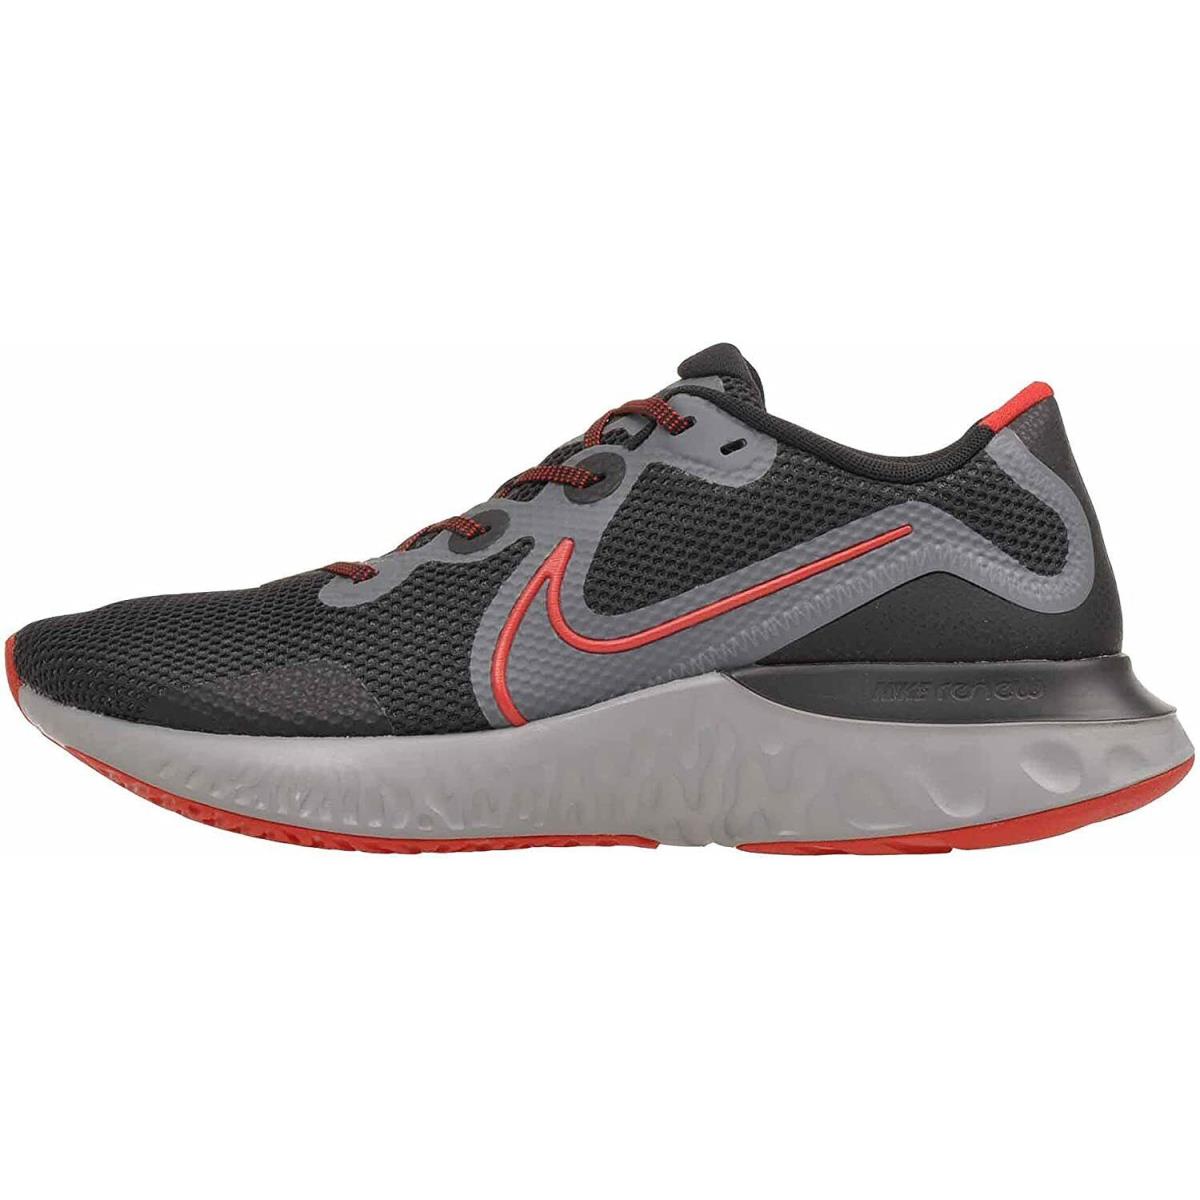 Nike Renew Run Mens Shoes Black/university Red/iron Grey Sneakers CZ8674-001 - Black/University Red/Iron Grey